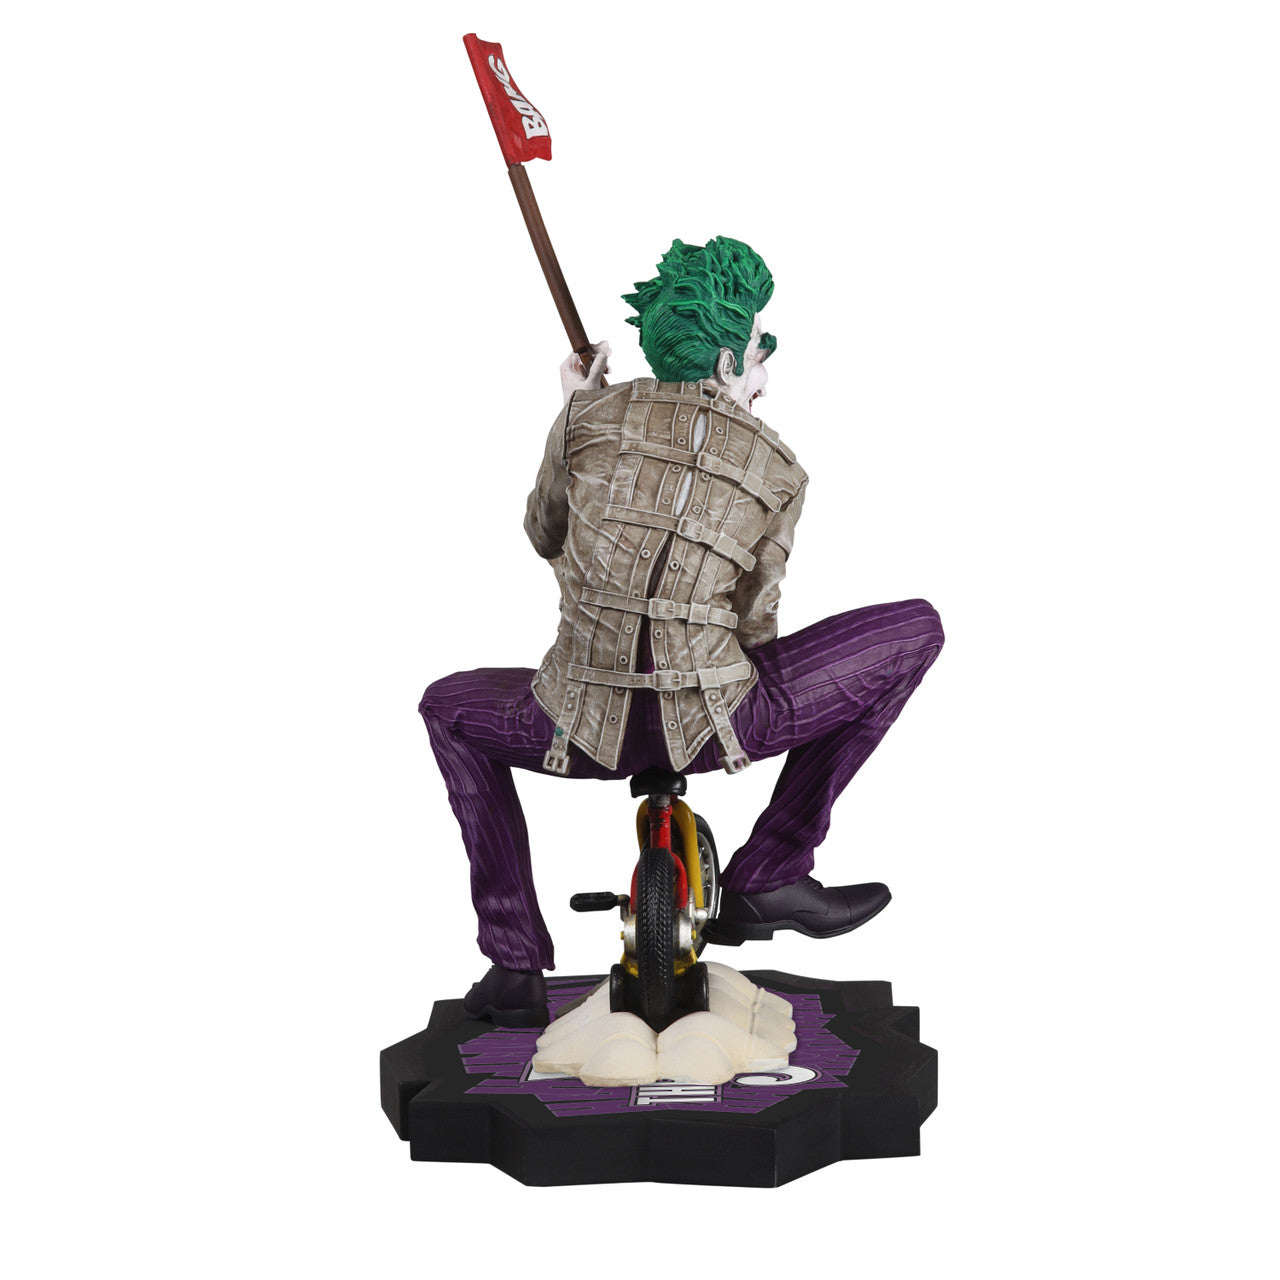 DC Direct The Joker by Andrea Sorrentino (The Joker Purple Craze) 1:10 Scale Resin Statue